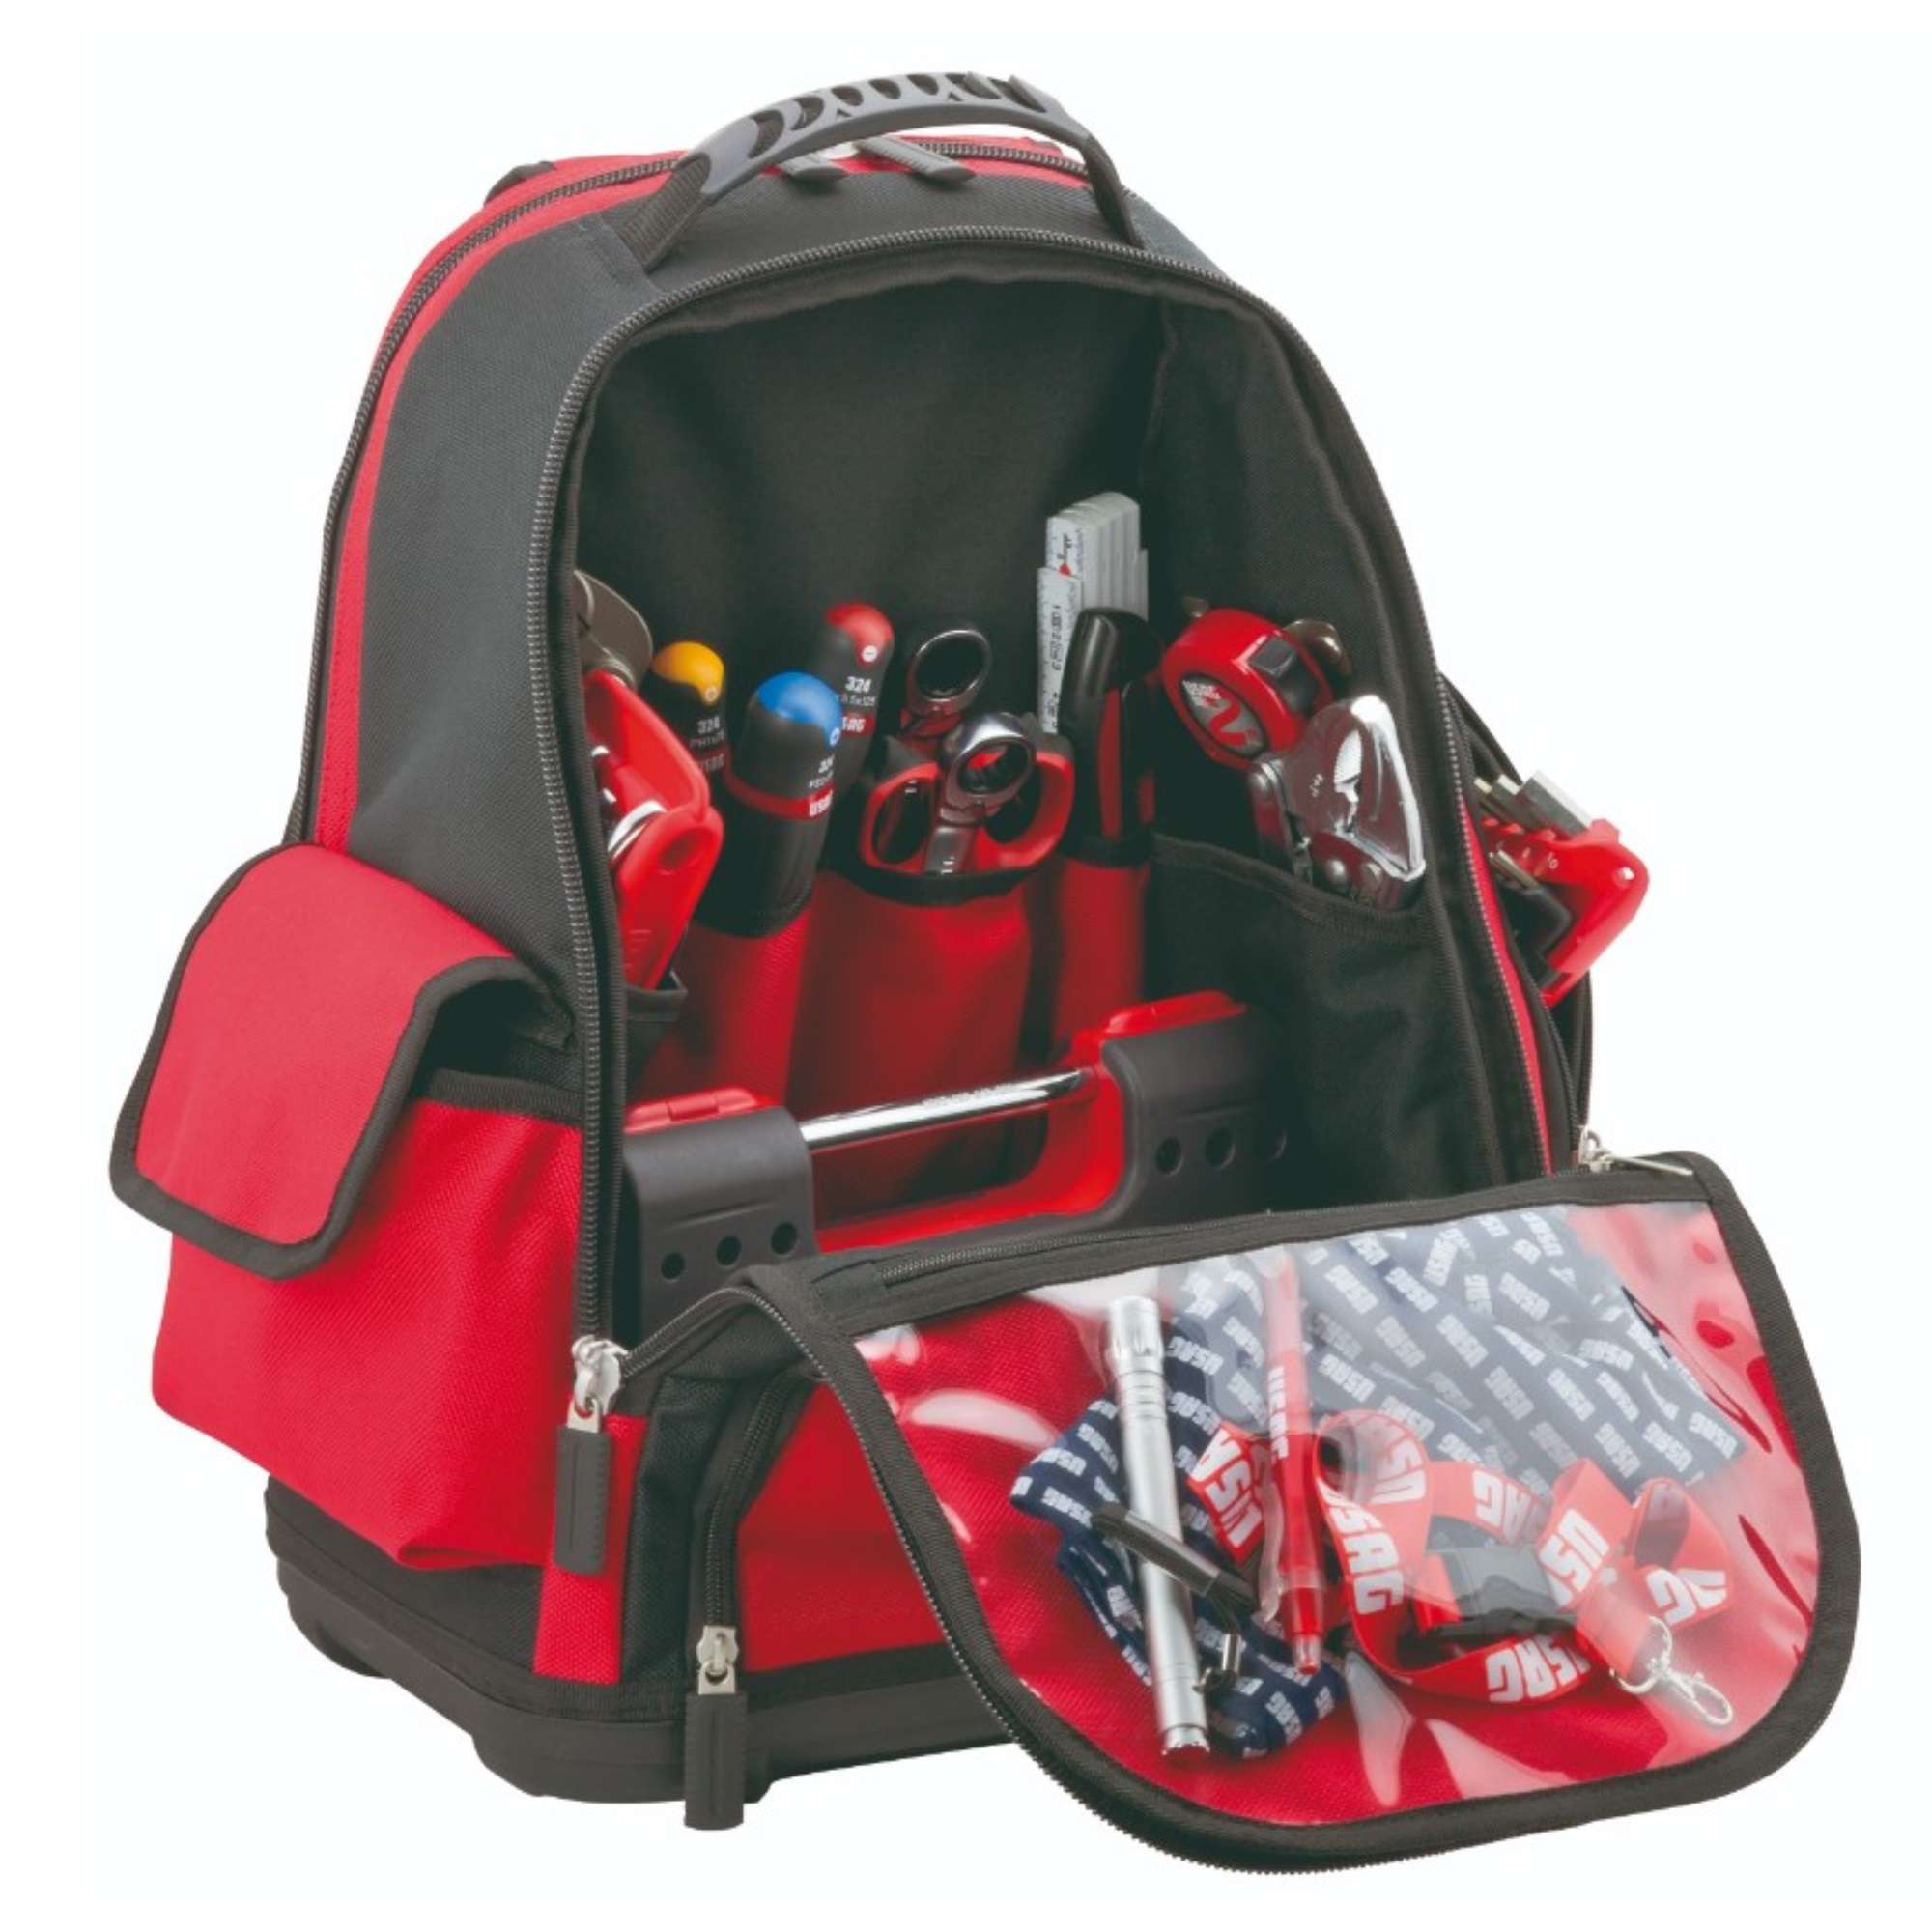 Professional tool backpack 30L capacity - Usag U00070004